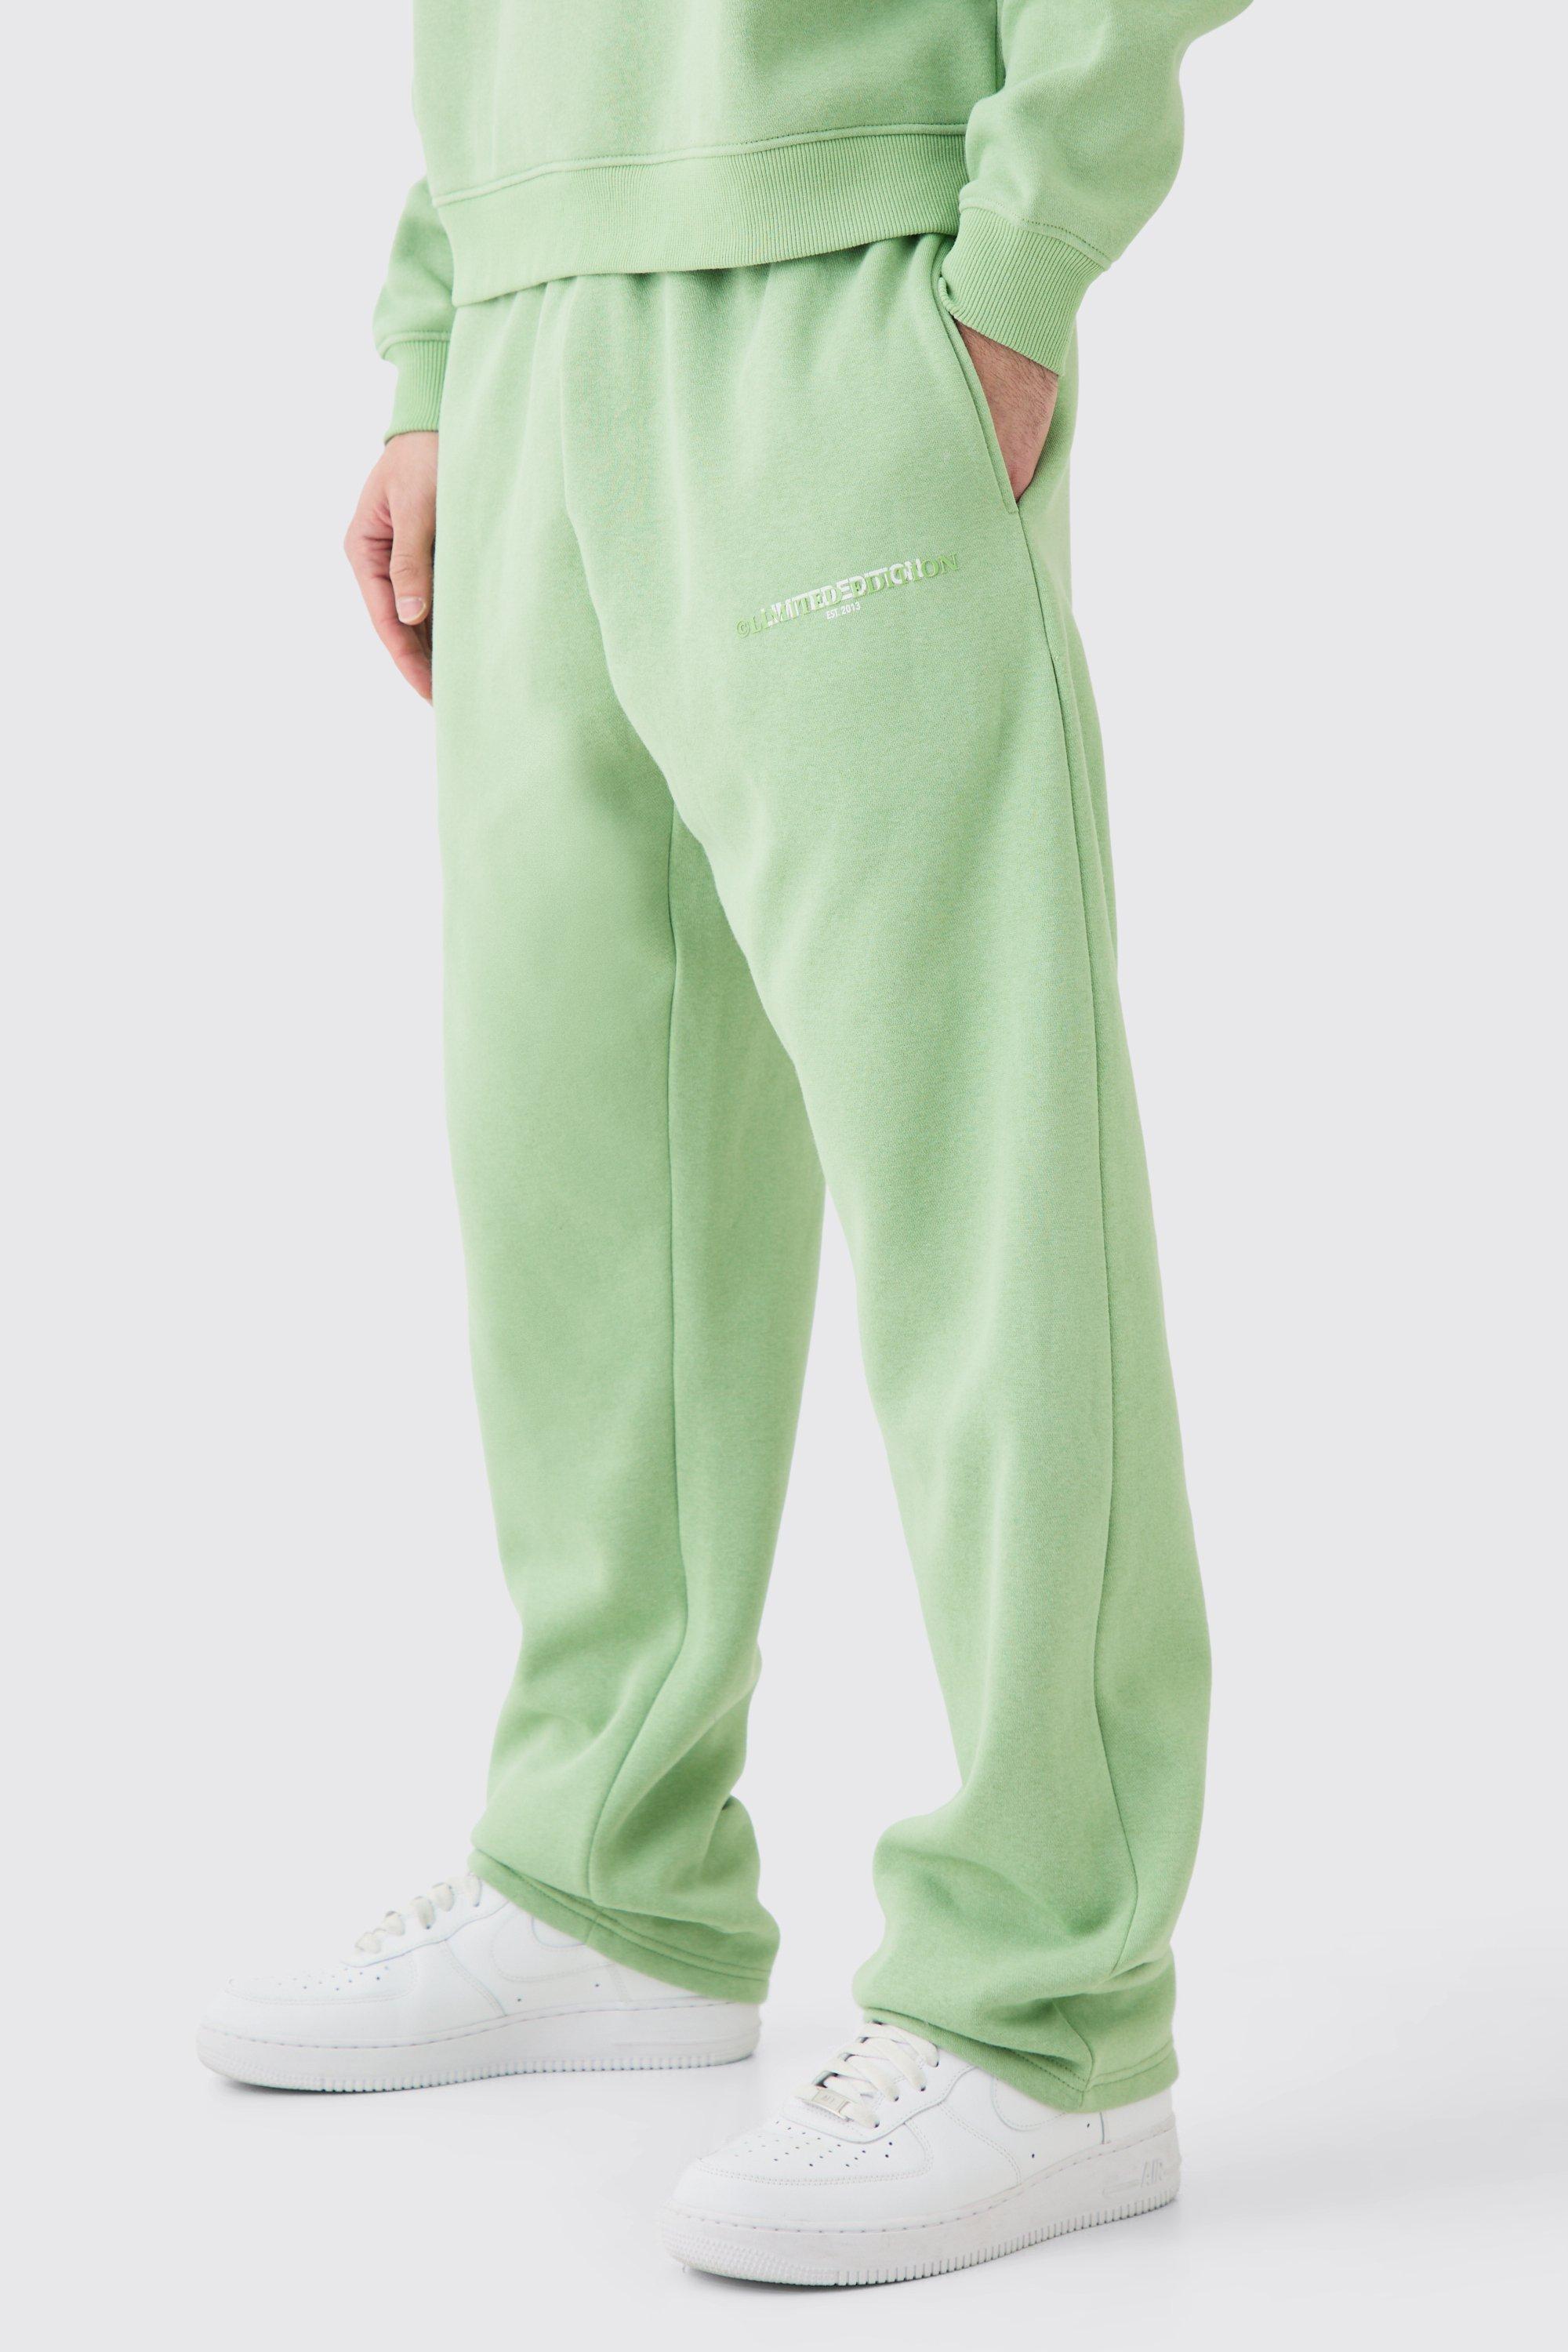 Image of Pantaloni tuta Basic rilassati Limited, Verde